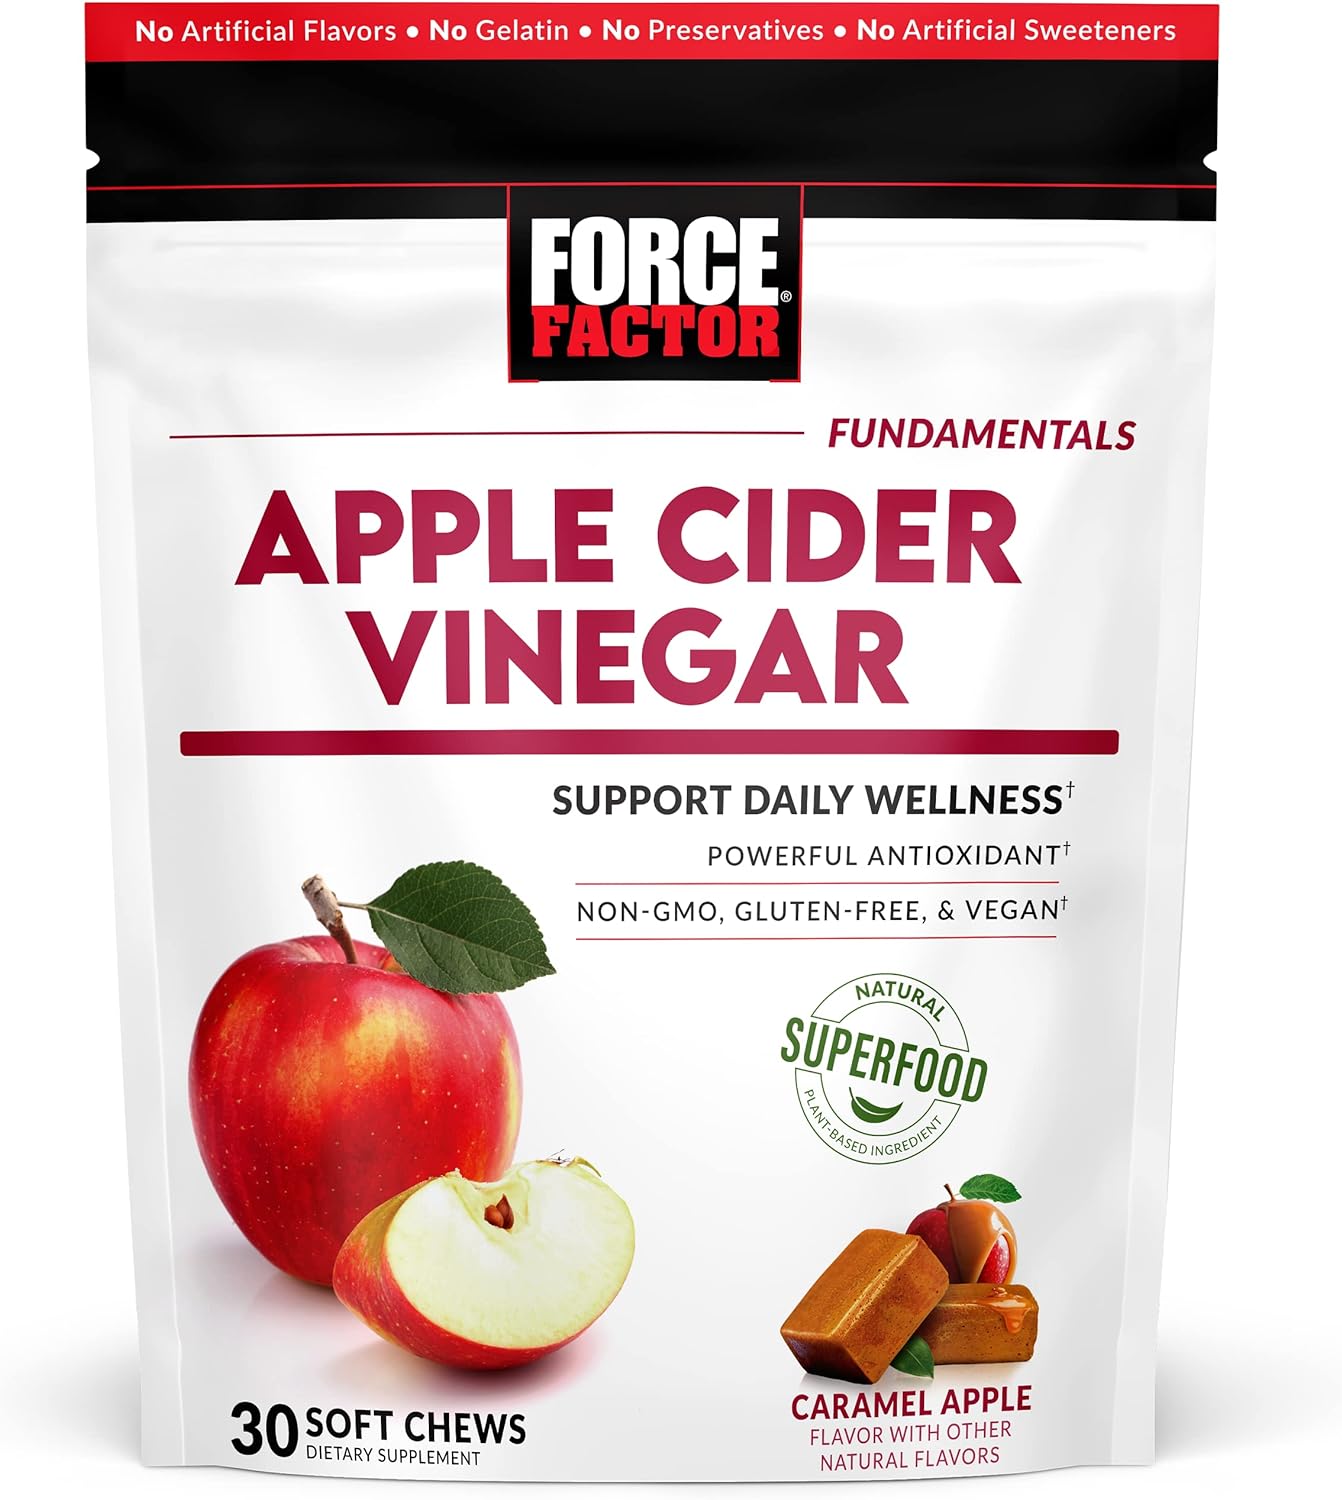 Force Factor Organic Apple Cider Vinegar Soft Chews for Digestion and Metabolism Support, Apple Cider Vinegar with Mother, ACV Supplement, Gluten-Free, & Vegan, Caramel Apple Flavor, 30 Soft Chews